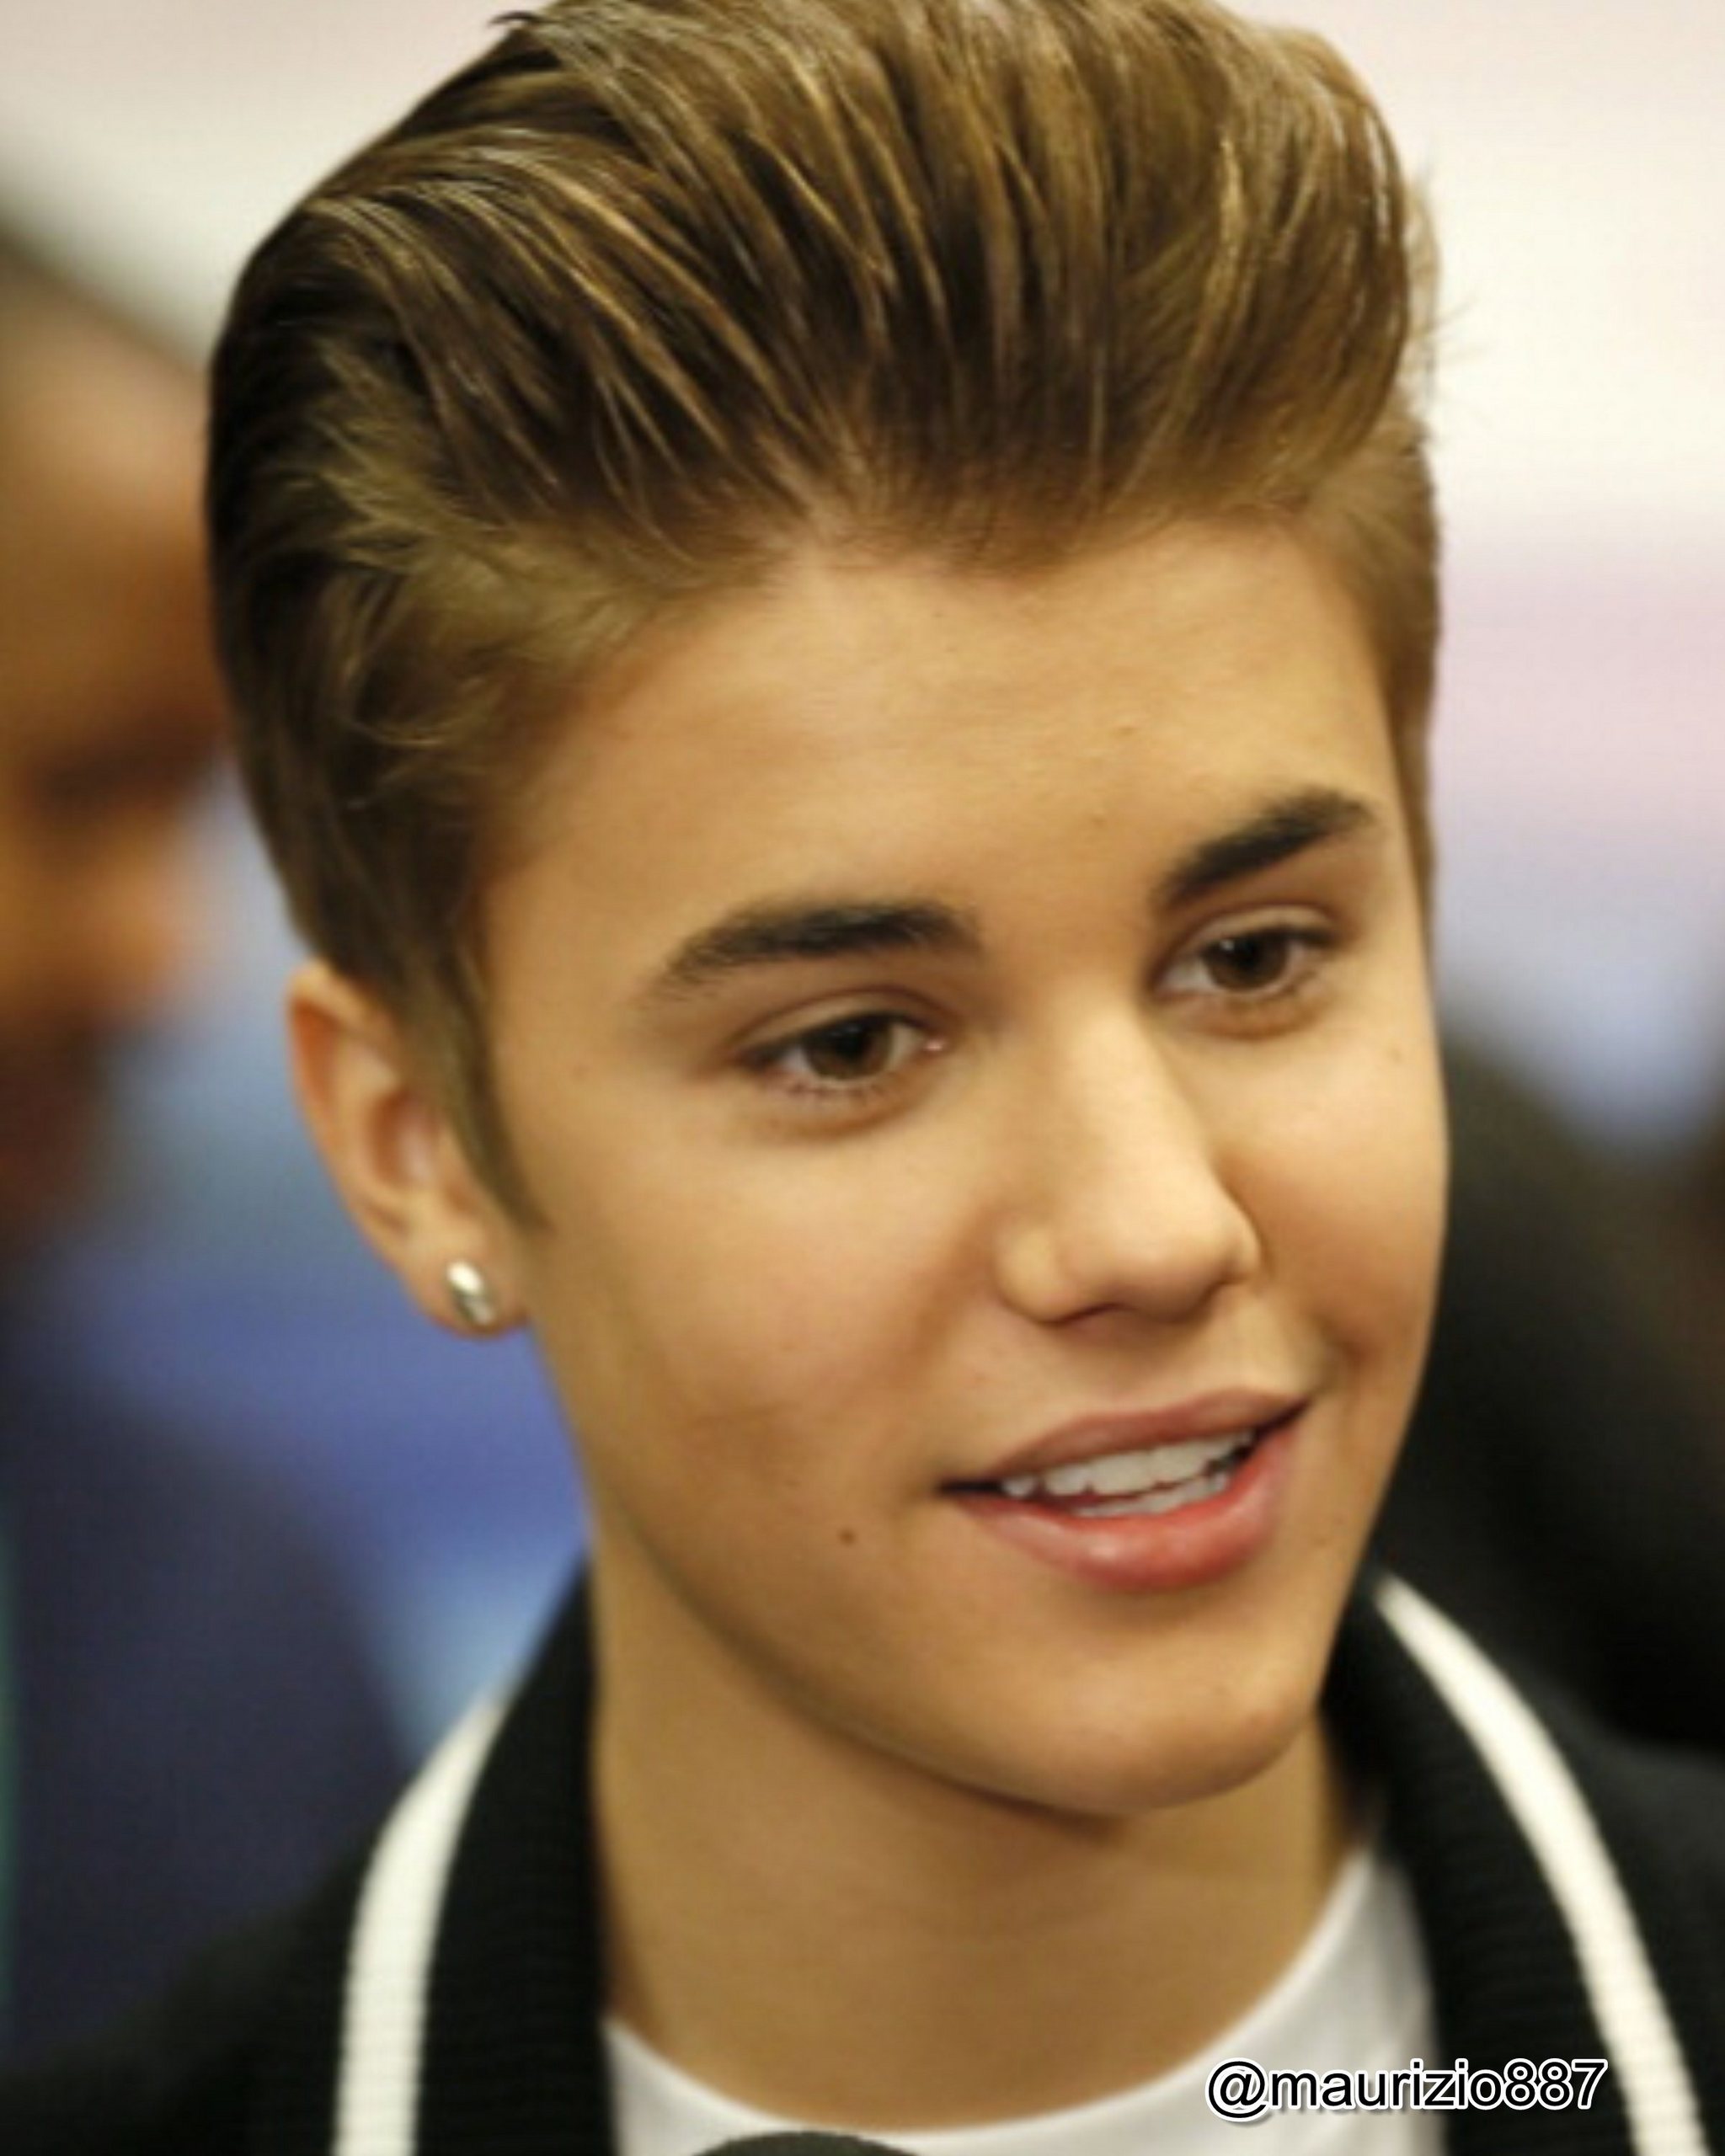 Justin At Tribeca Film Festival - Justin Bieber Photo (30632180) - Fanpop